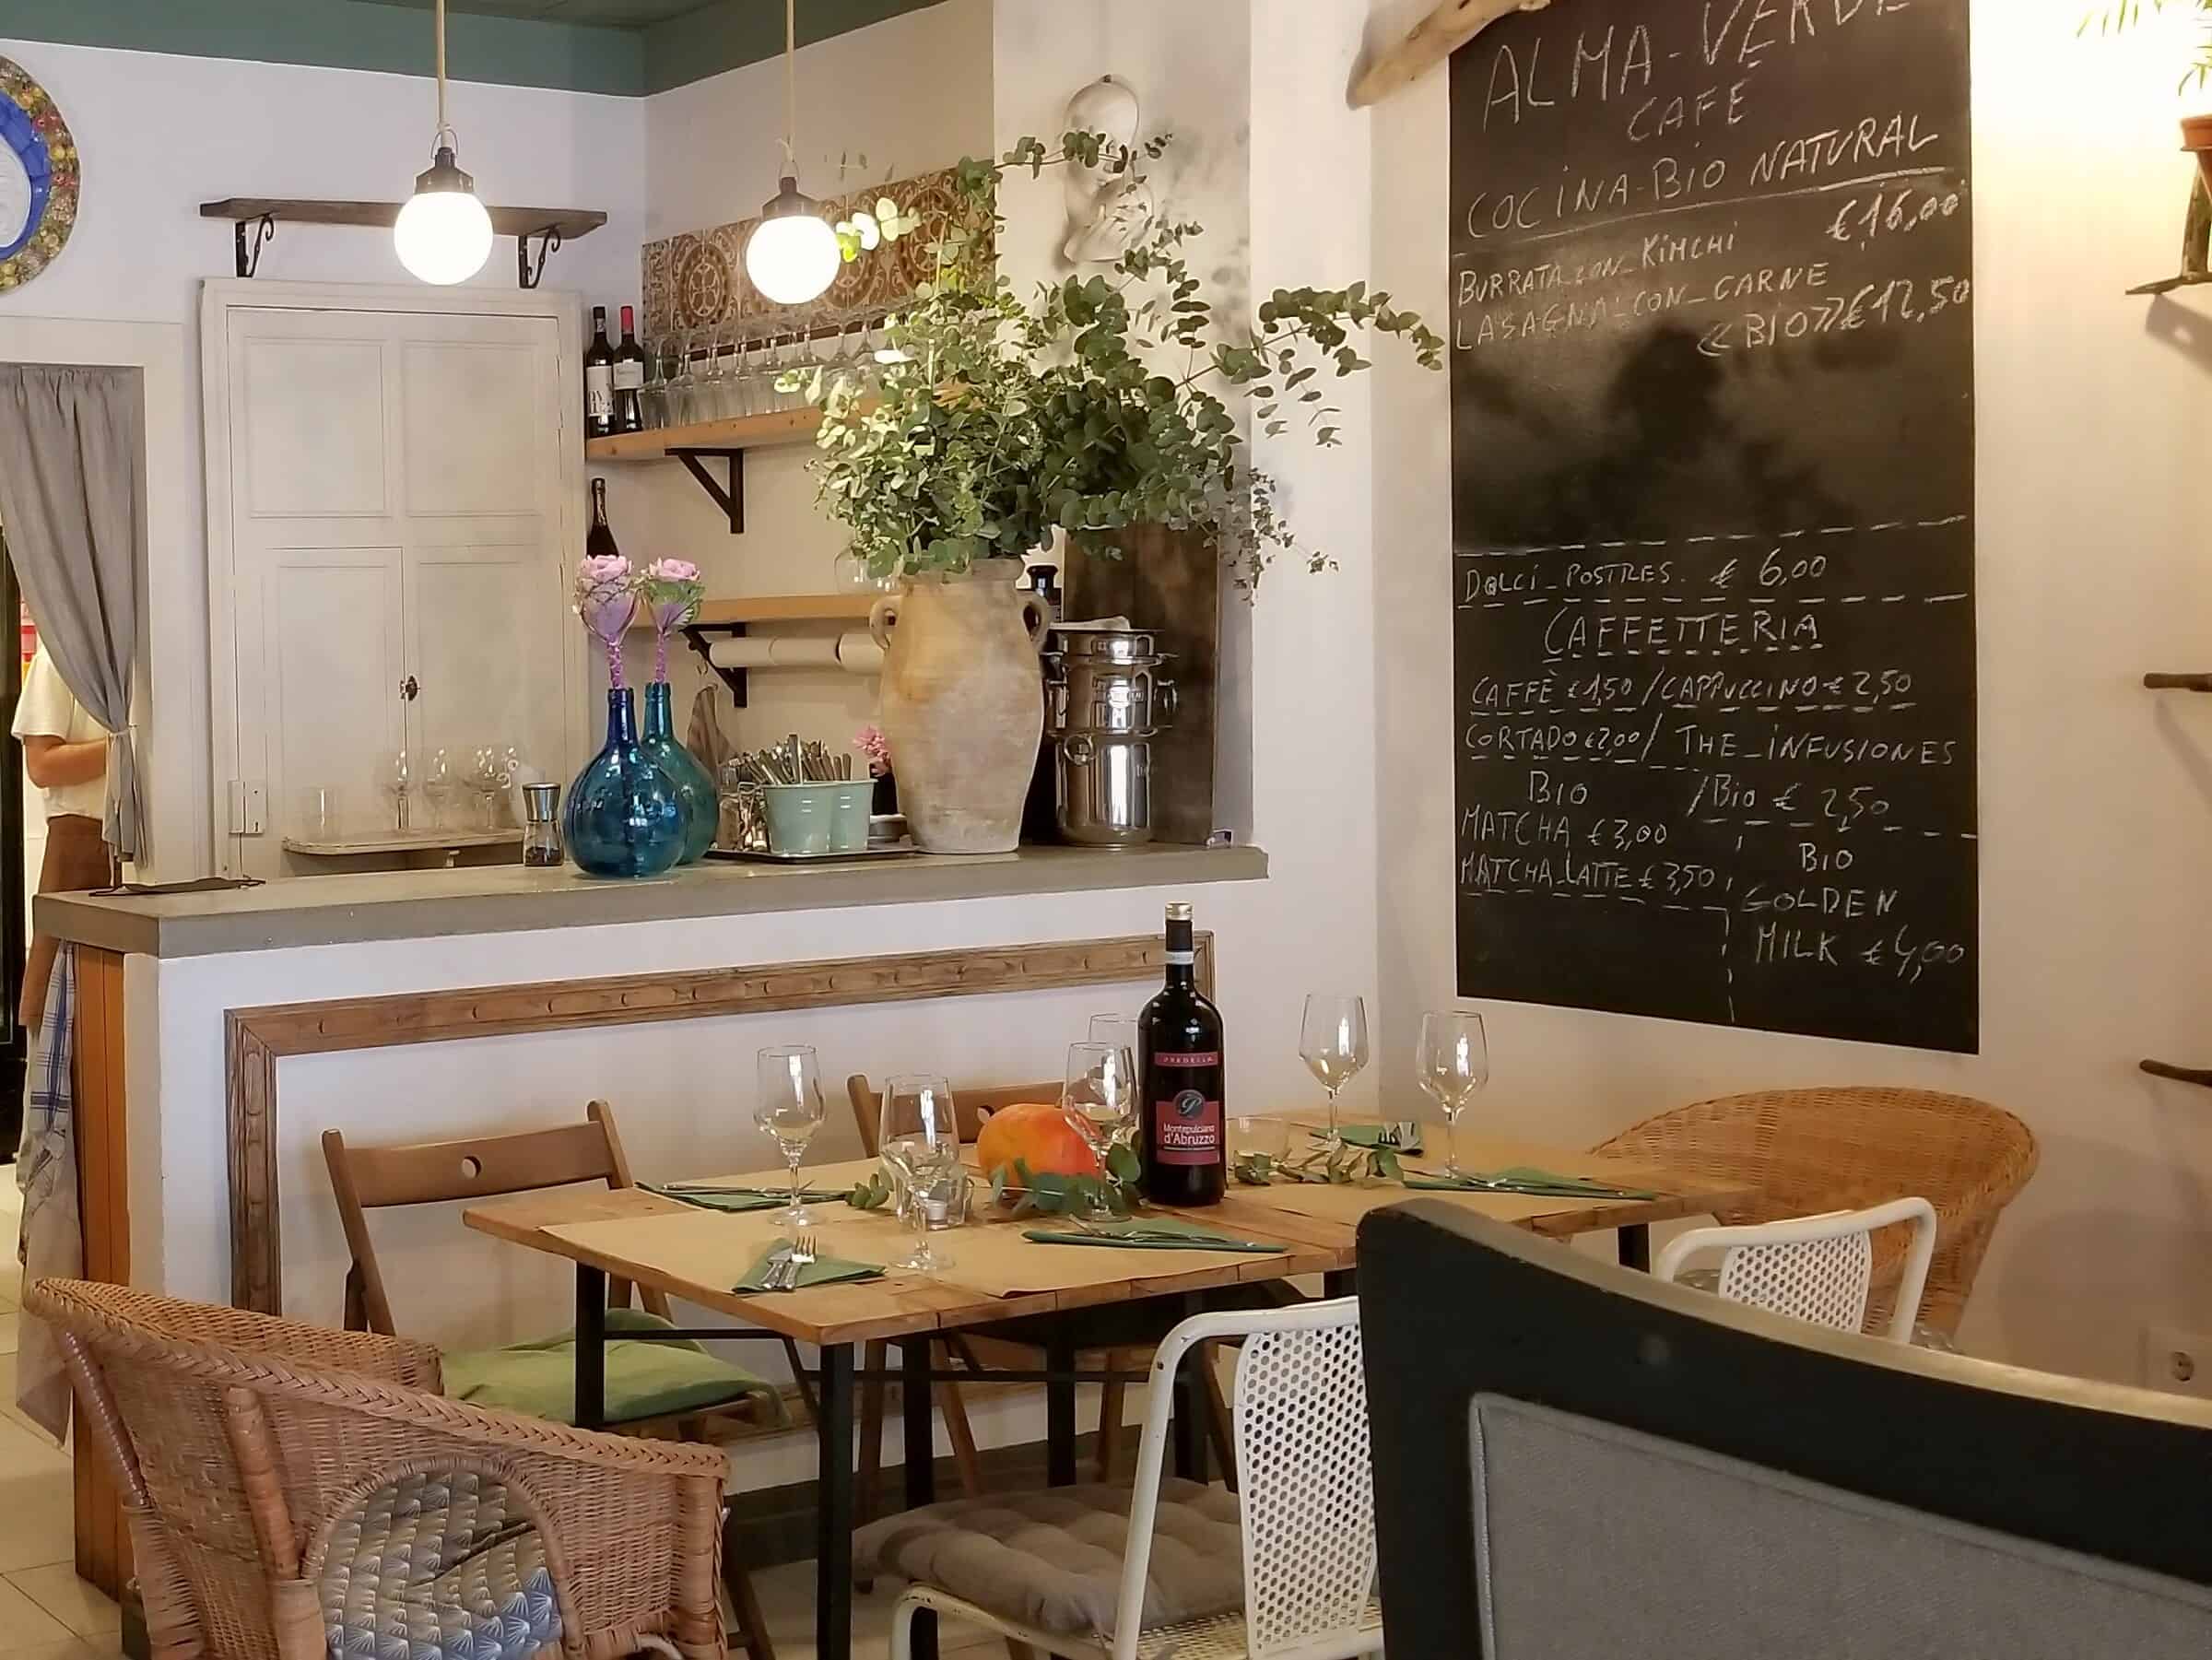 Alma Verde Café & Restaurant - Corner table by the bar